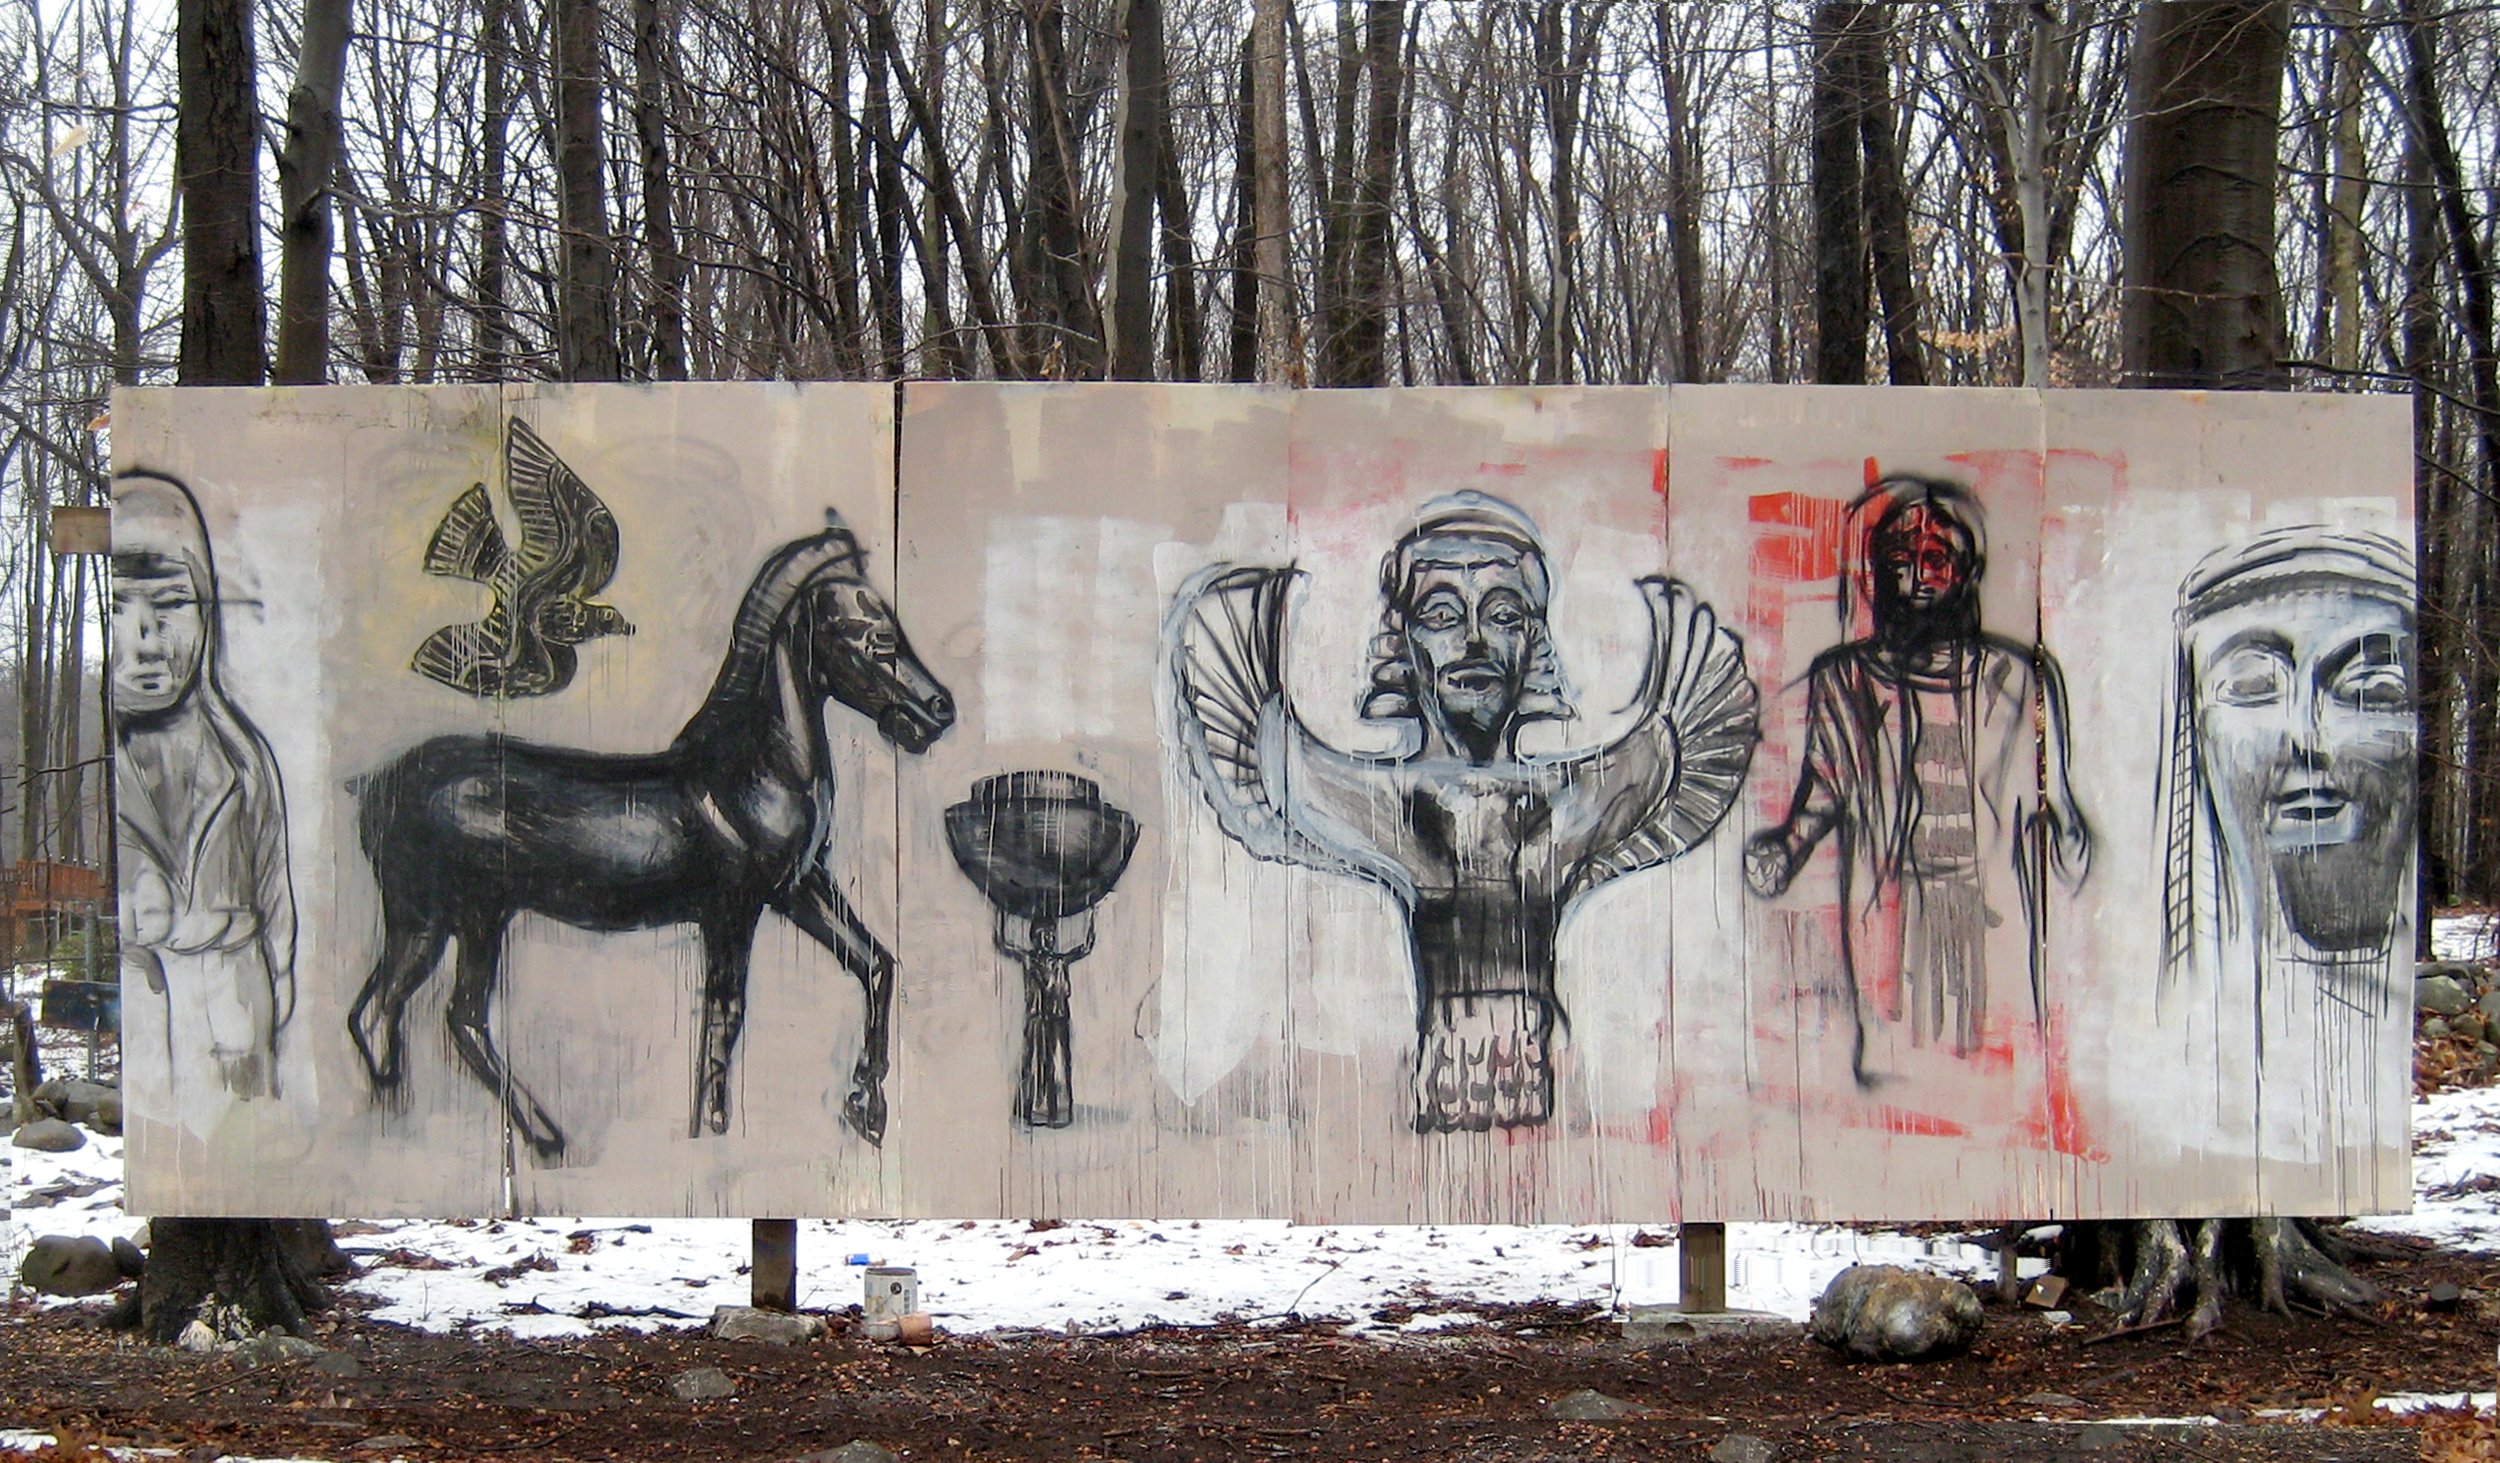   Mural,  mixed media, Chestnut Ridge, New York, 2009   Nonextant  